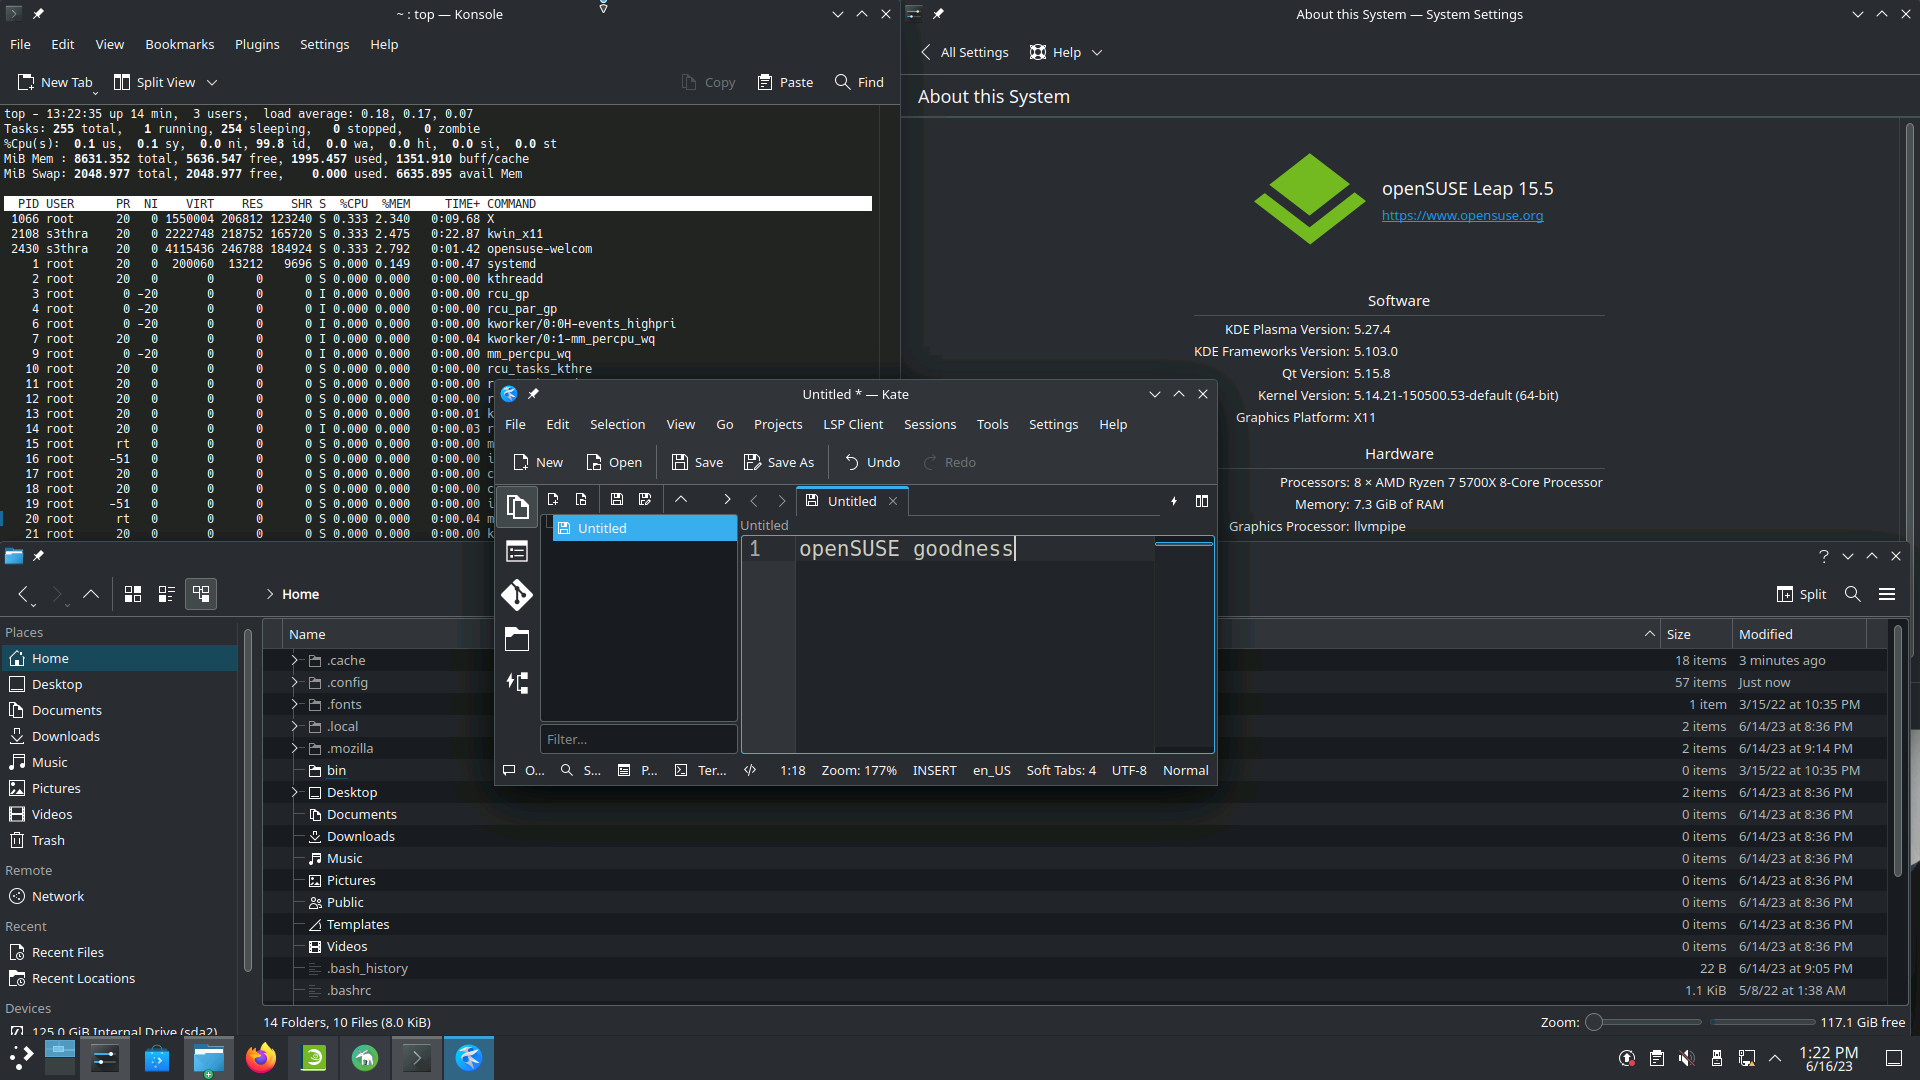 openSUSE Leap 15.5 desktop apps